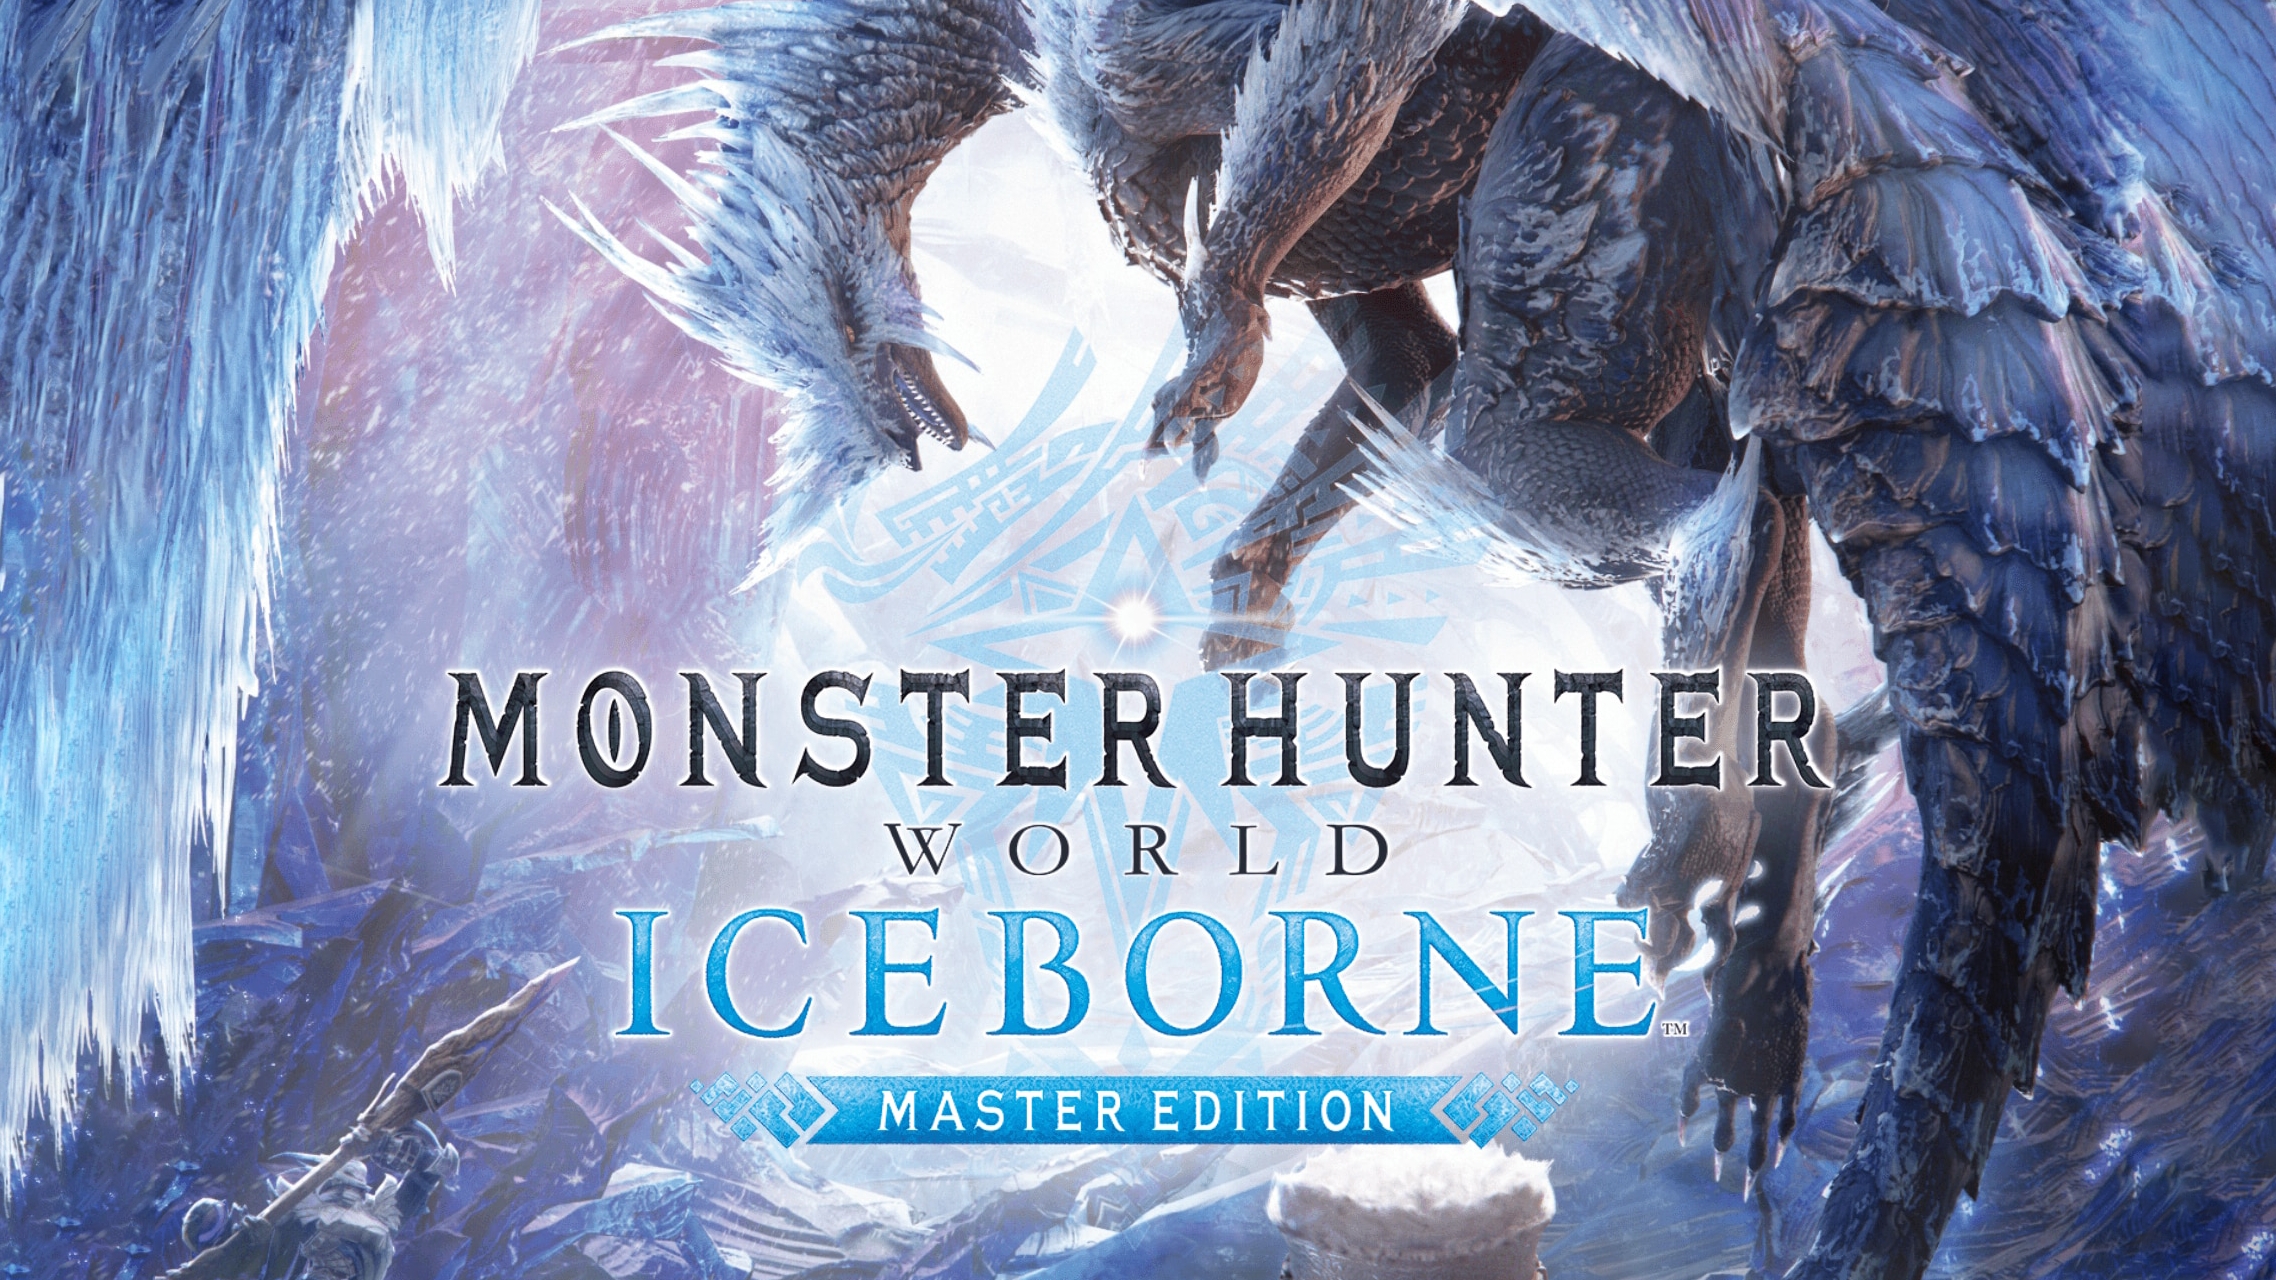 Monster Hunter World: Iceborne Master Edition - PlayStation 4 Standard  Edition